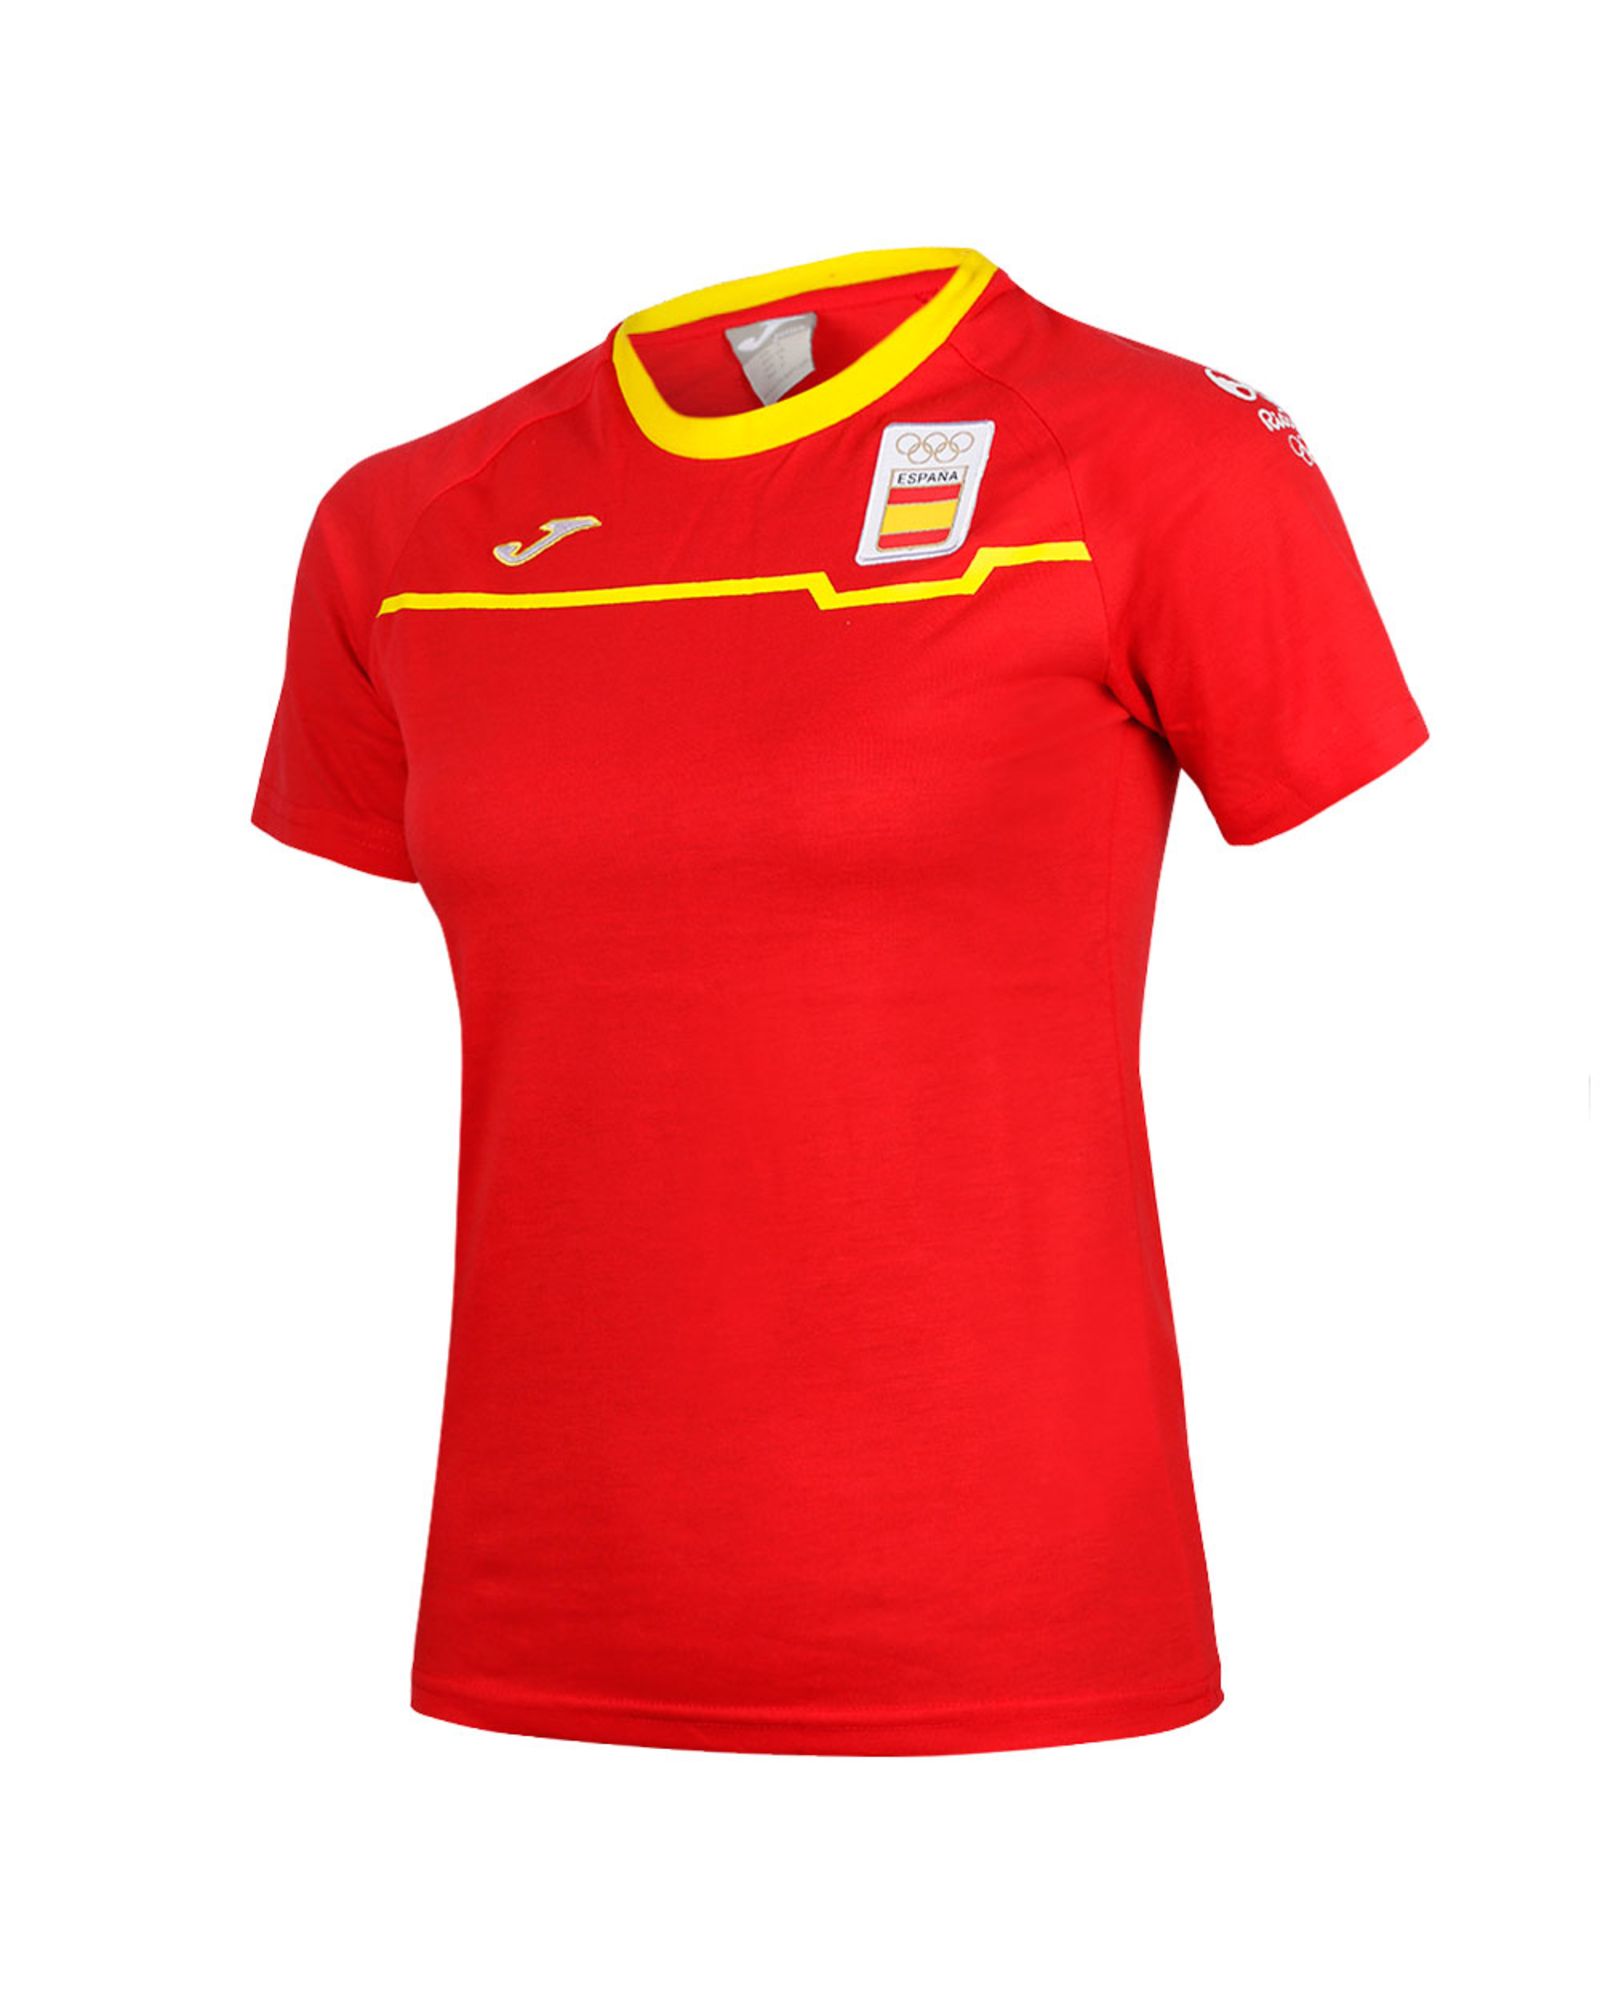 Camiseta de Paseo Equipo Olímpico Español Rio 2016 Mujer Rojo - Fútbol Factory